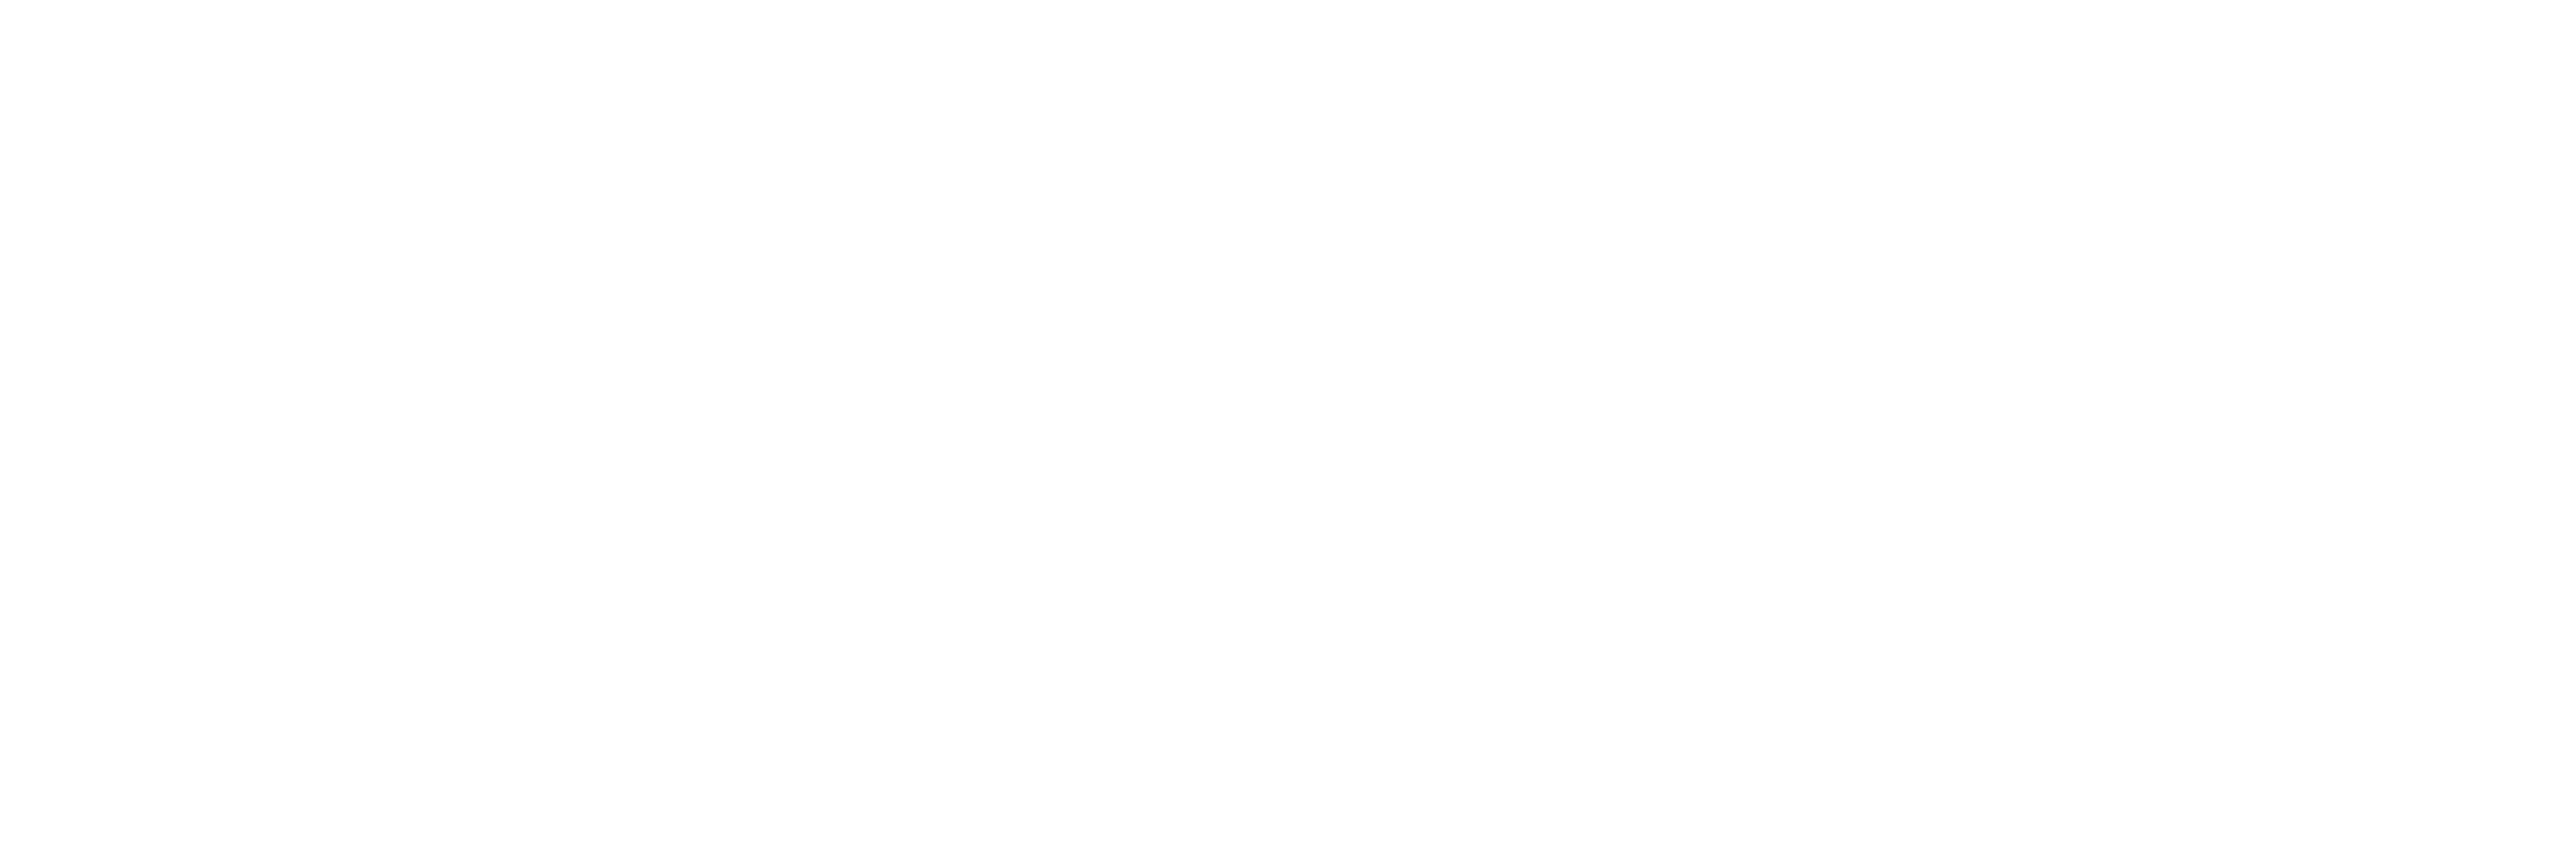 Signature travel network